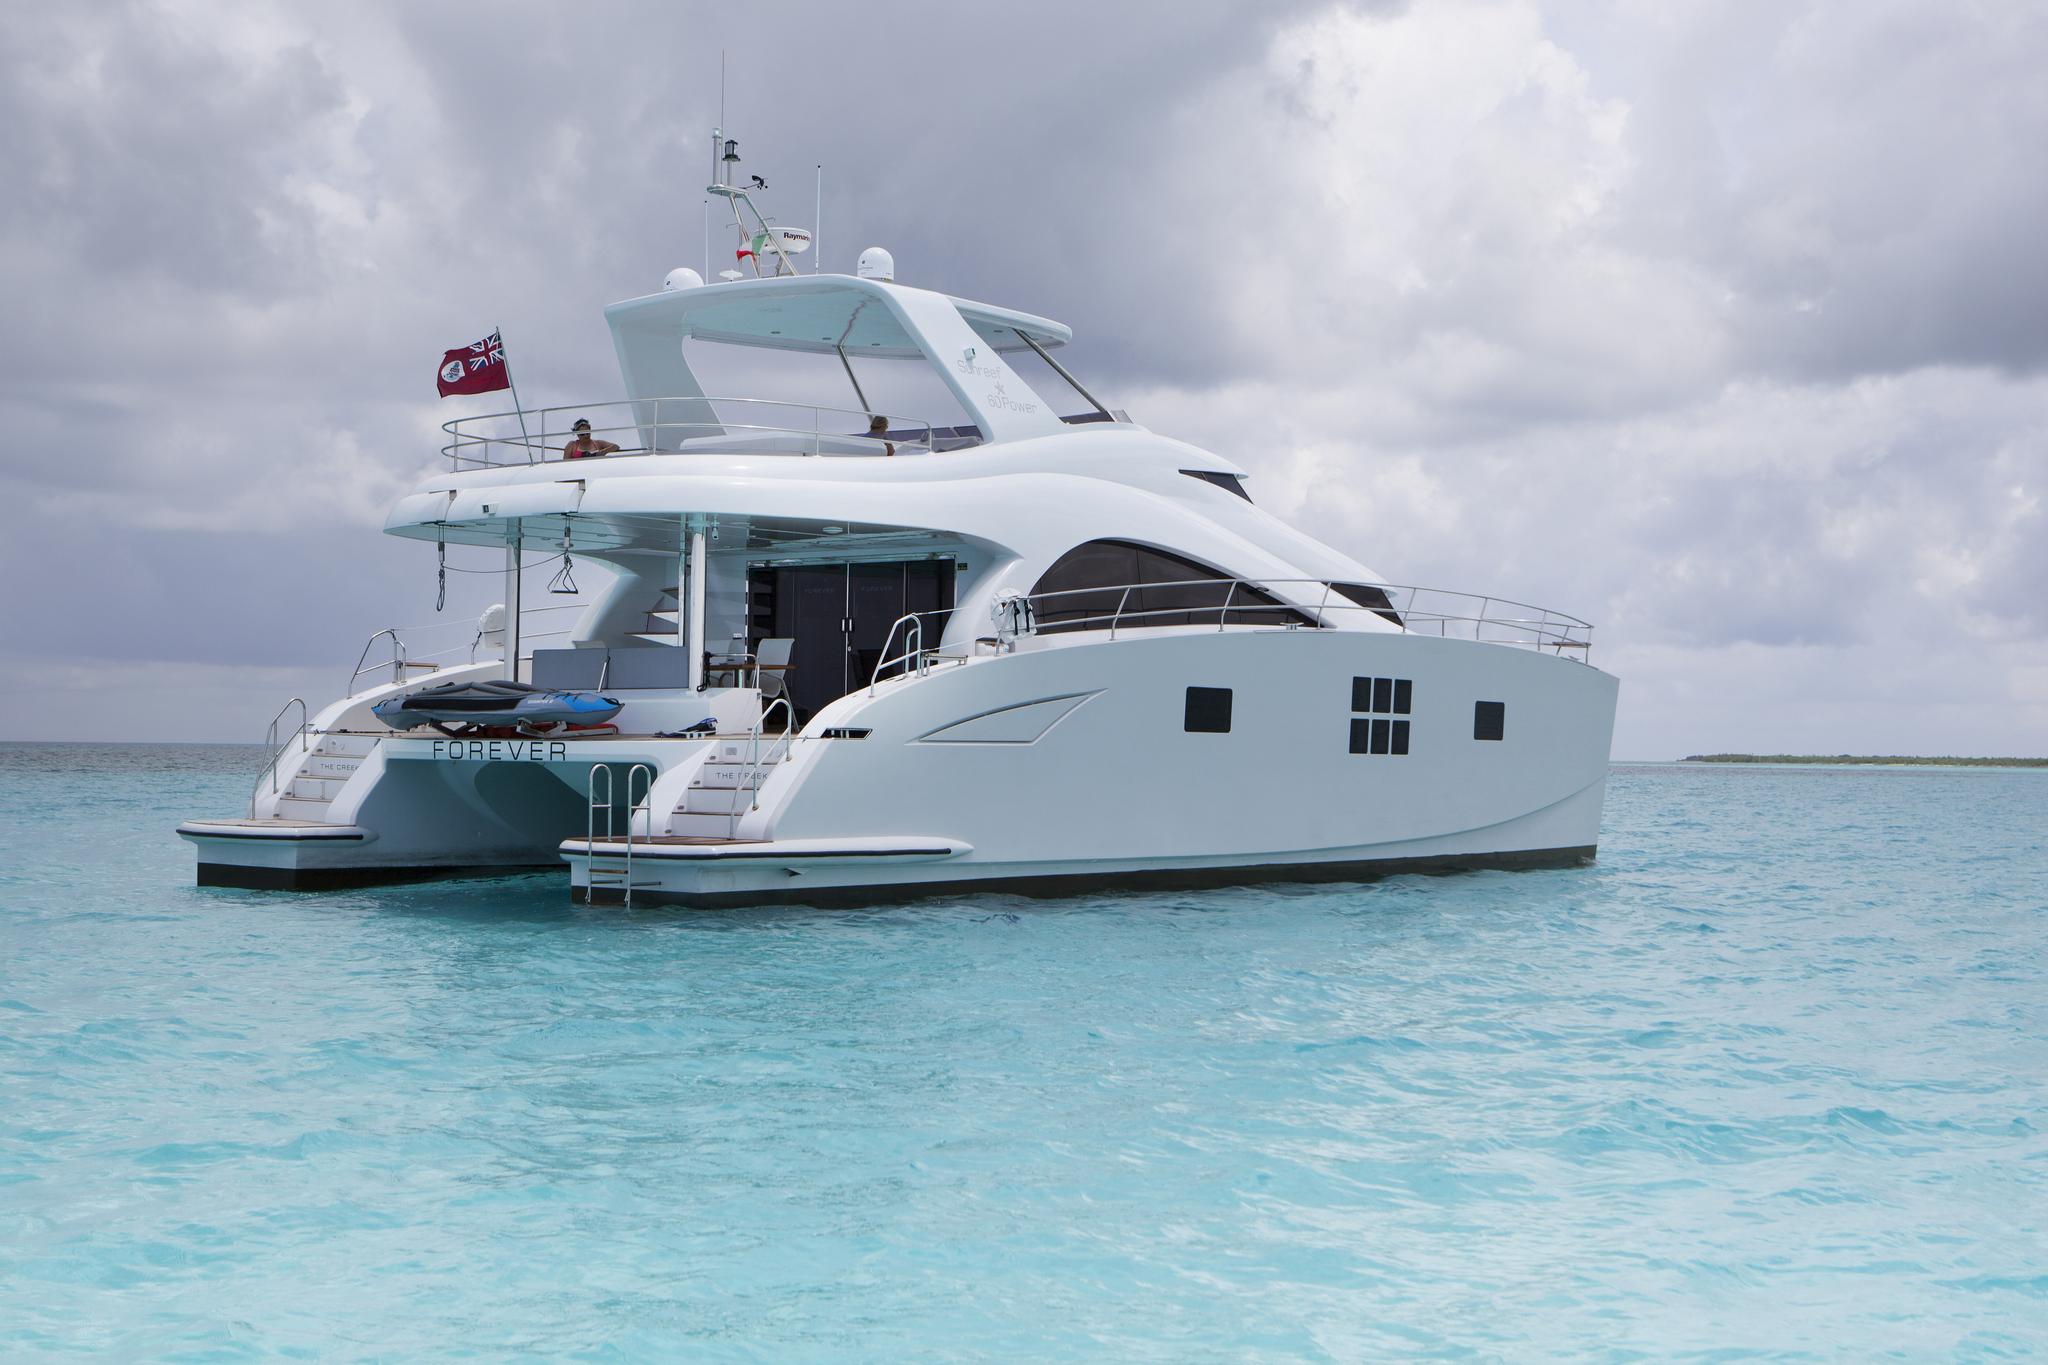 New Power Catamaran for Sale  60 Sunreef Power Boat Highlights